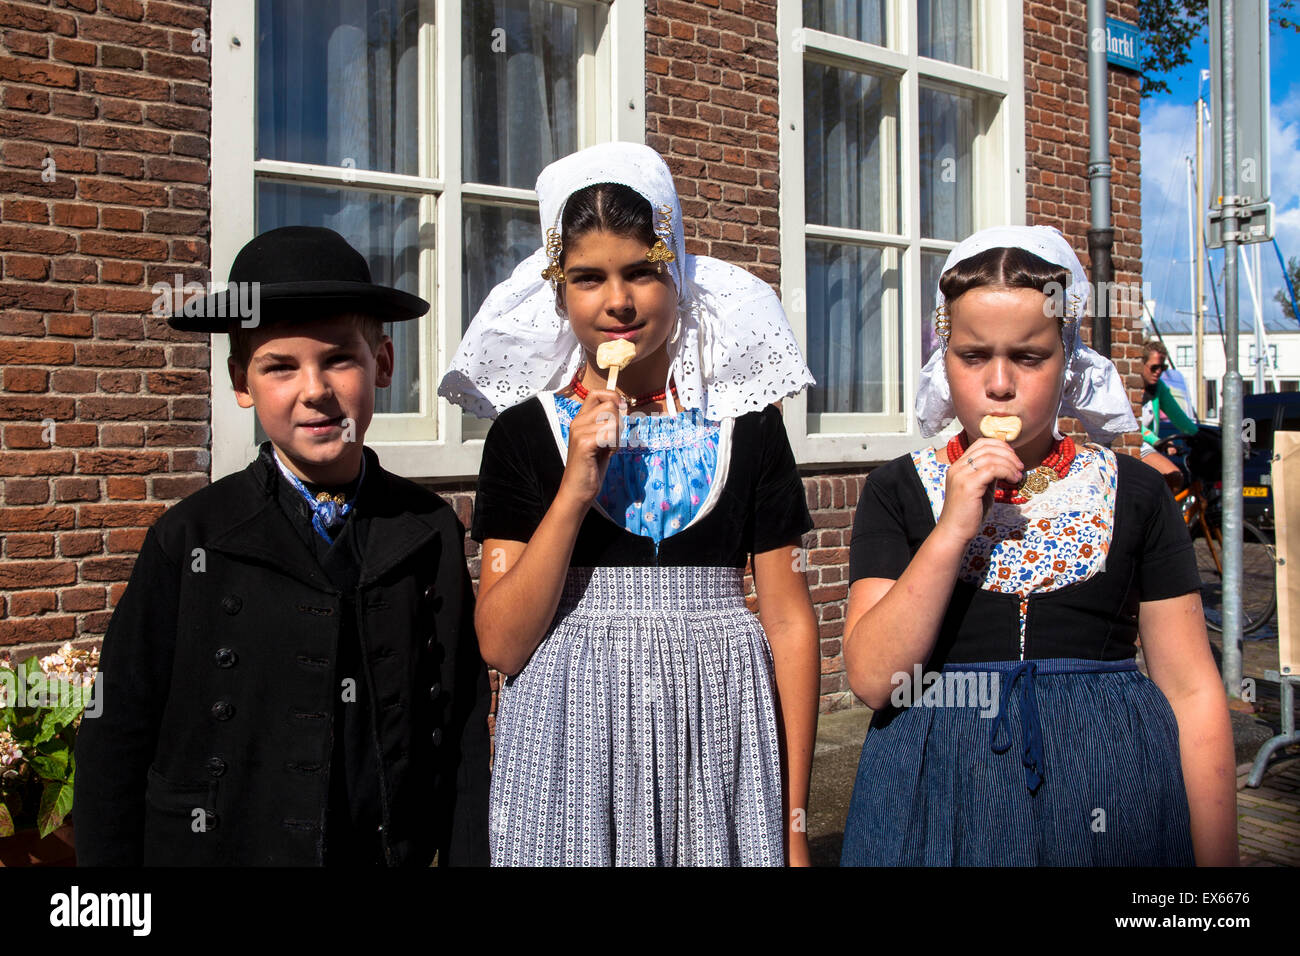 Netherlands, Zeeland, the village Veere on the peninsula Walcheren, children dressed in traditional costumes. Stock Photo